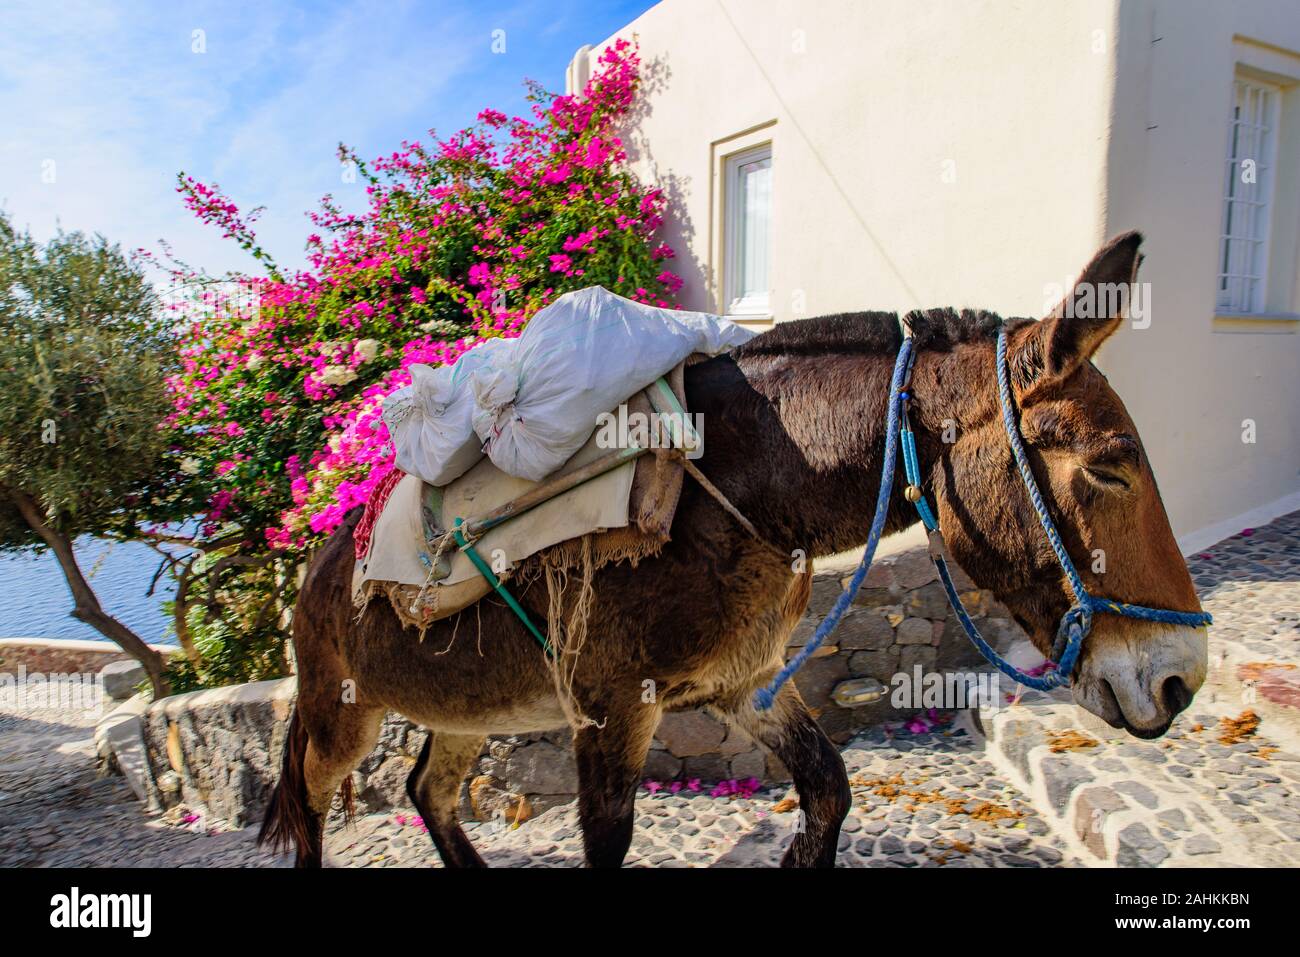 Donkeys carrying cargo in Oia, Santorini, Greece Stock Photo